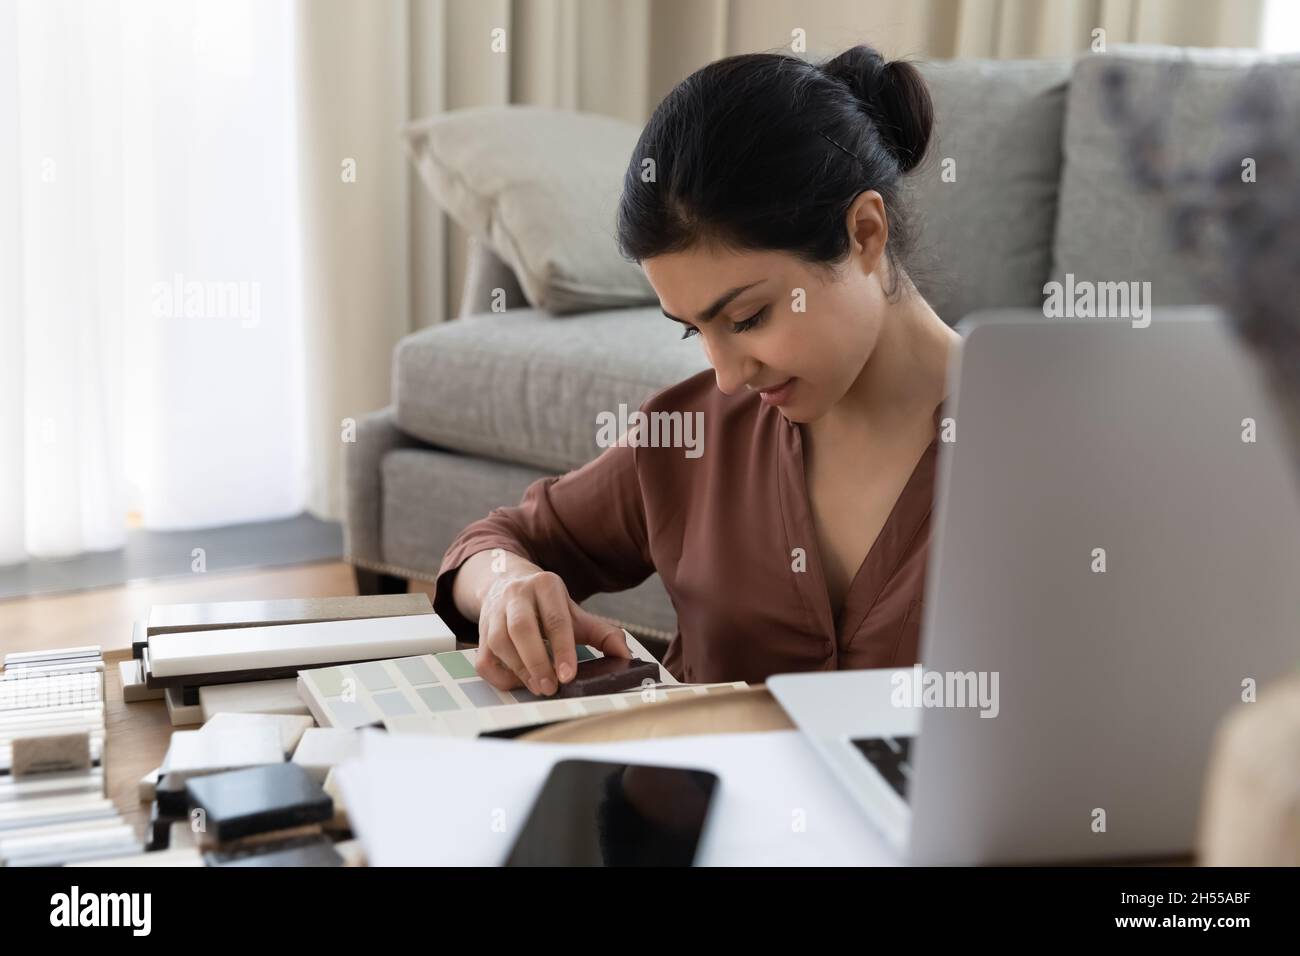 Indian female architect or interior designer choosing tiles samples Stock Photo